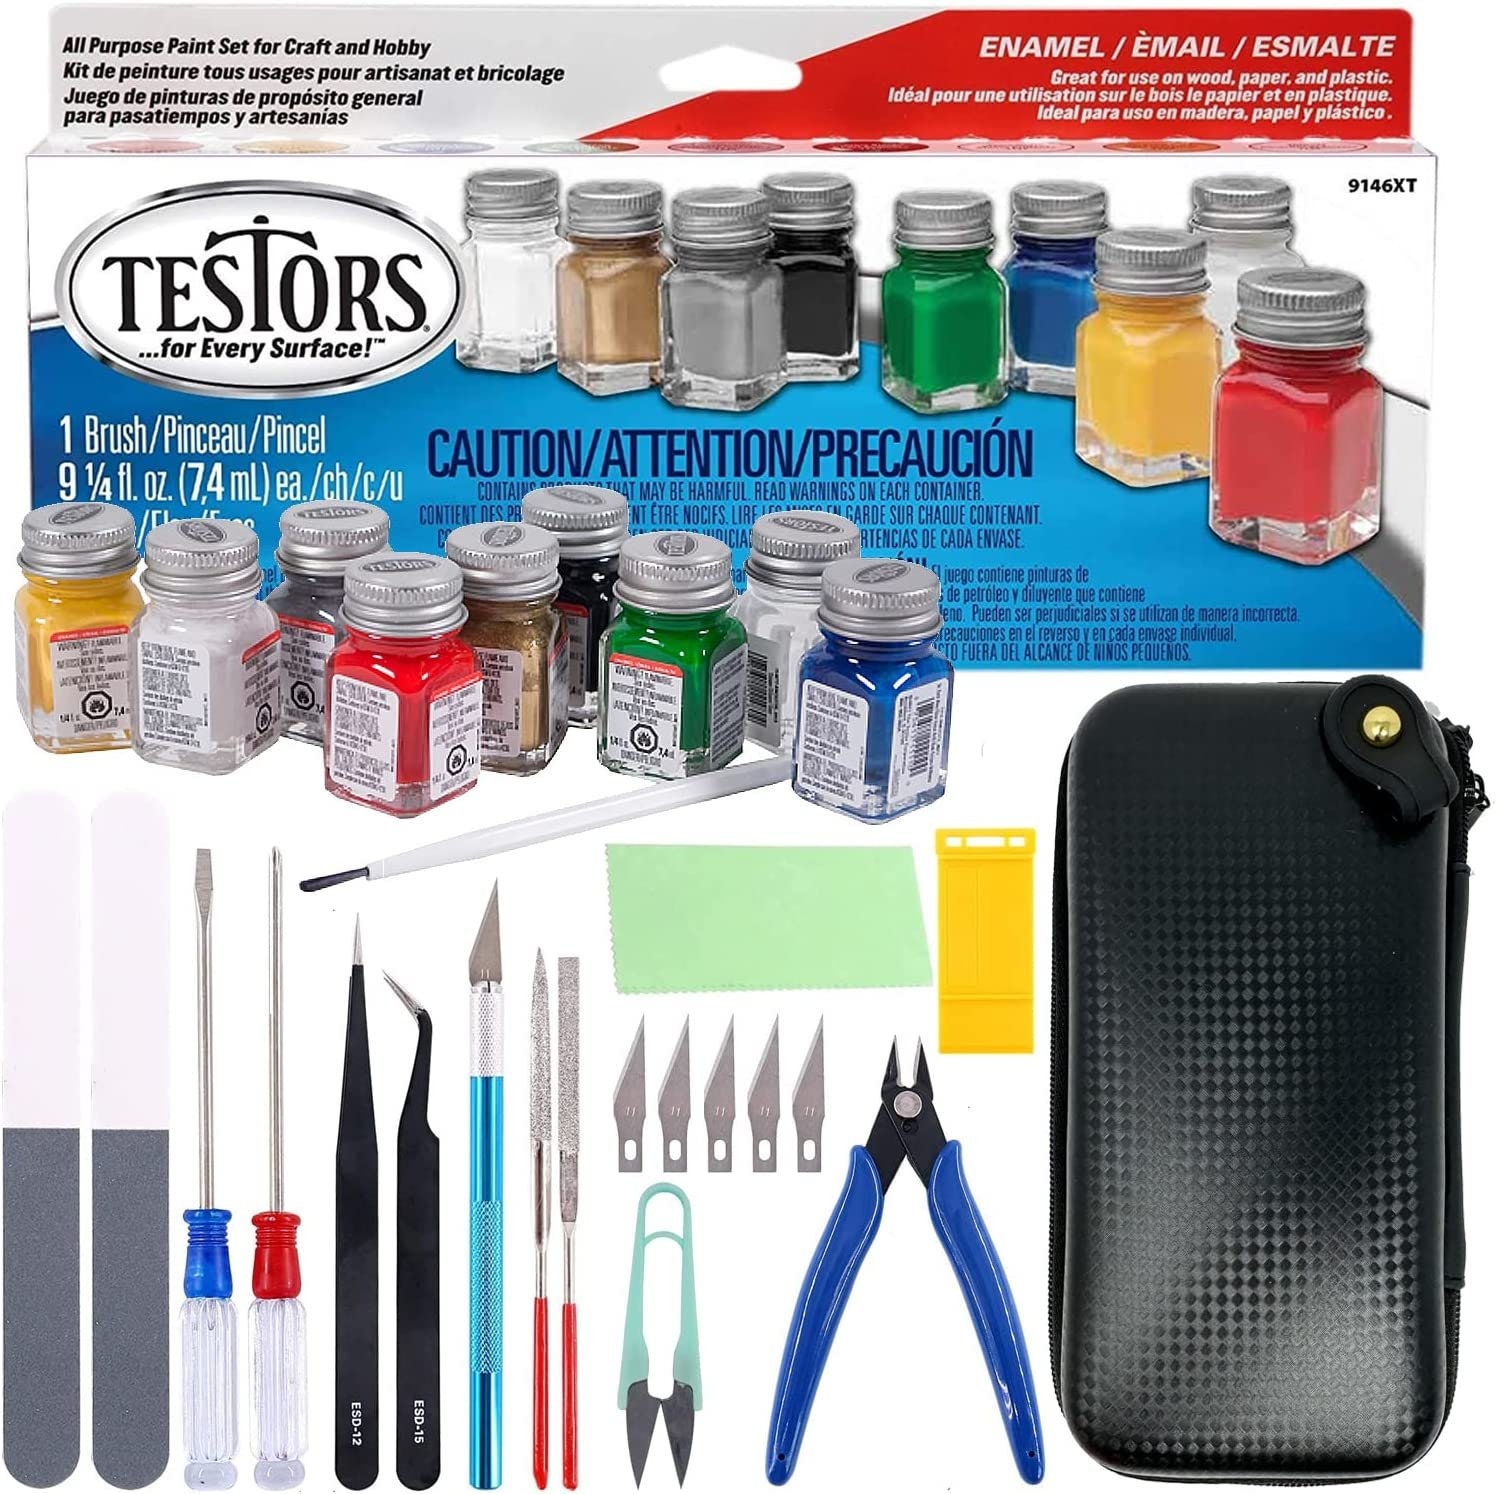 Testors 3509C Testors Plastic Cement Value Pack Includes 4 Precision Glue  Tips 